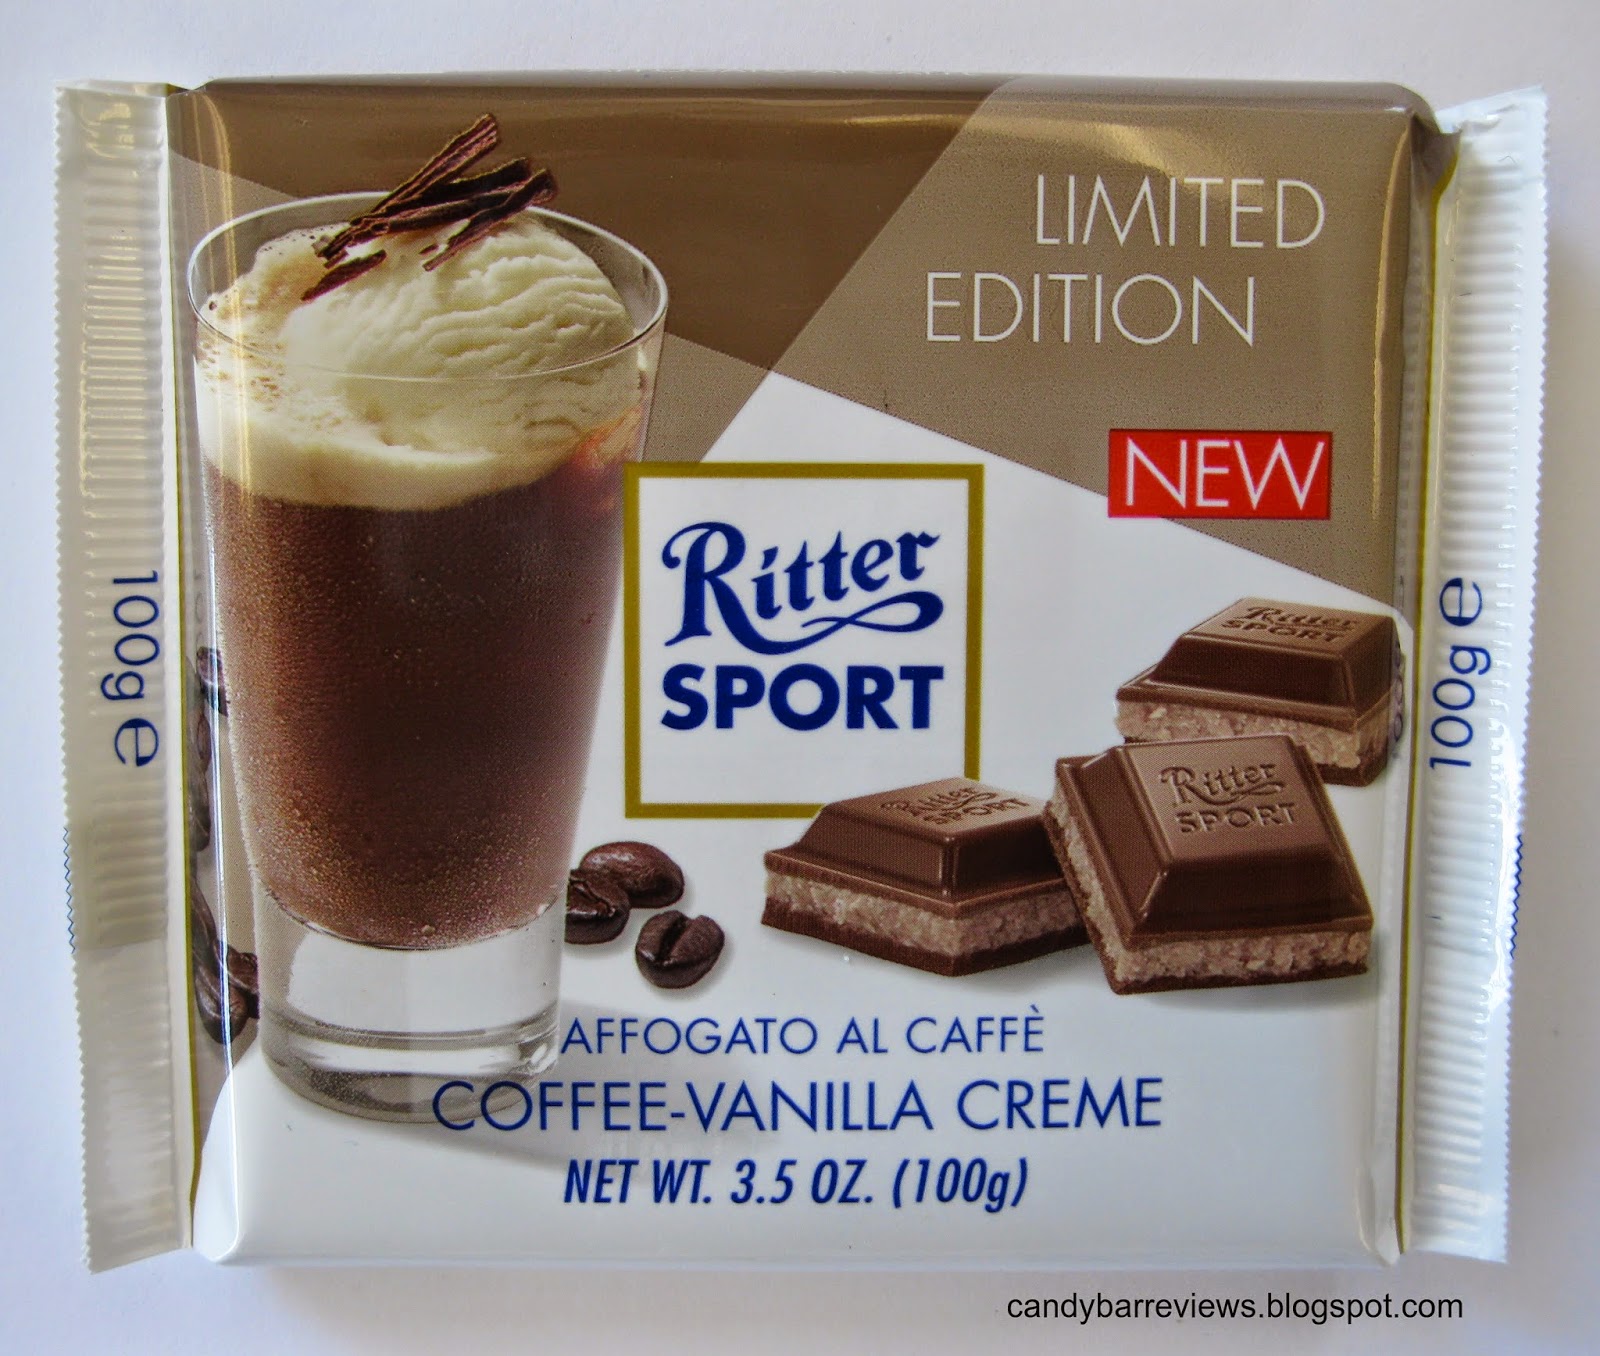 Candy Bar Reviews: Ritter Sport Coffee-Vanilla Creme